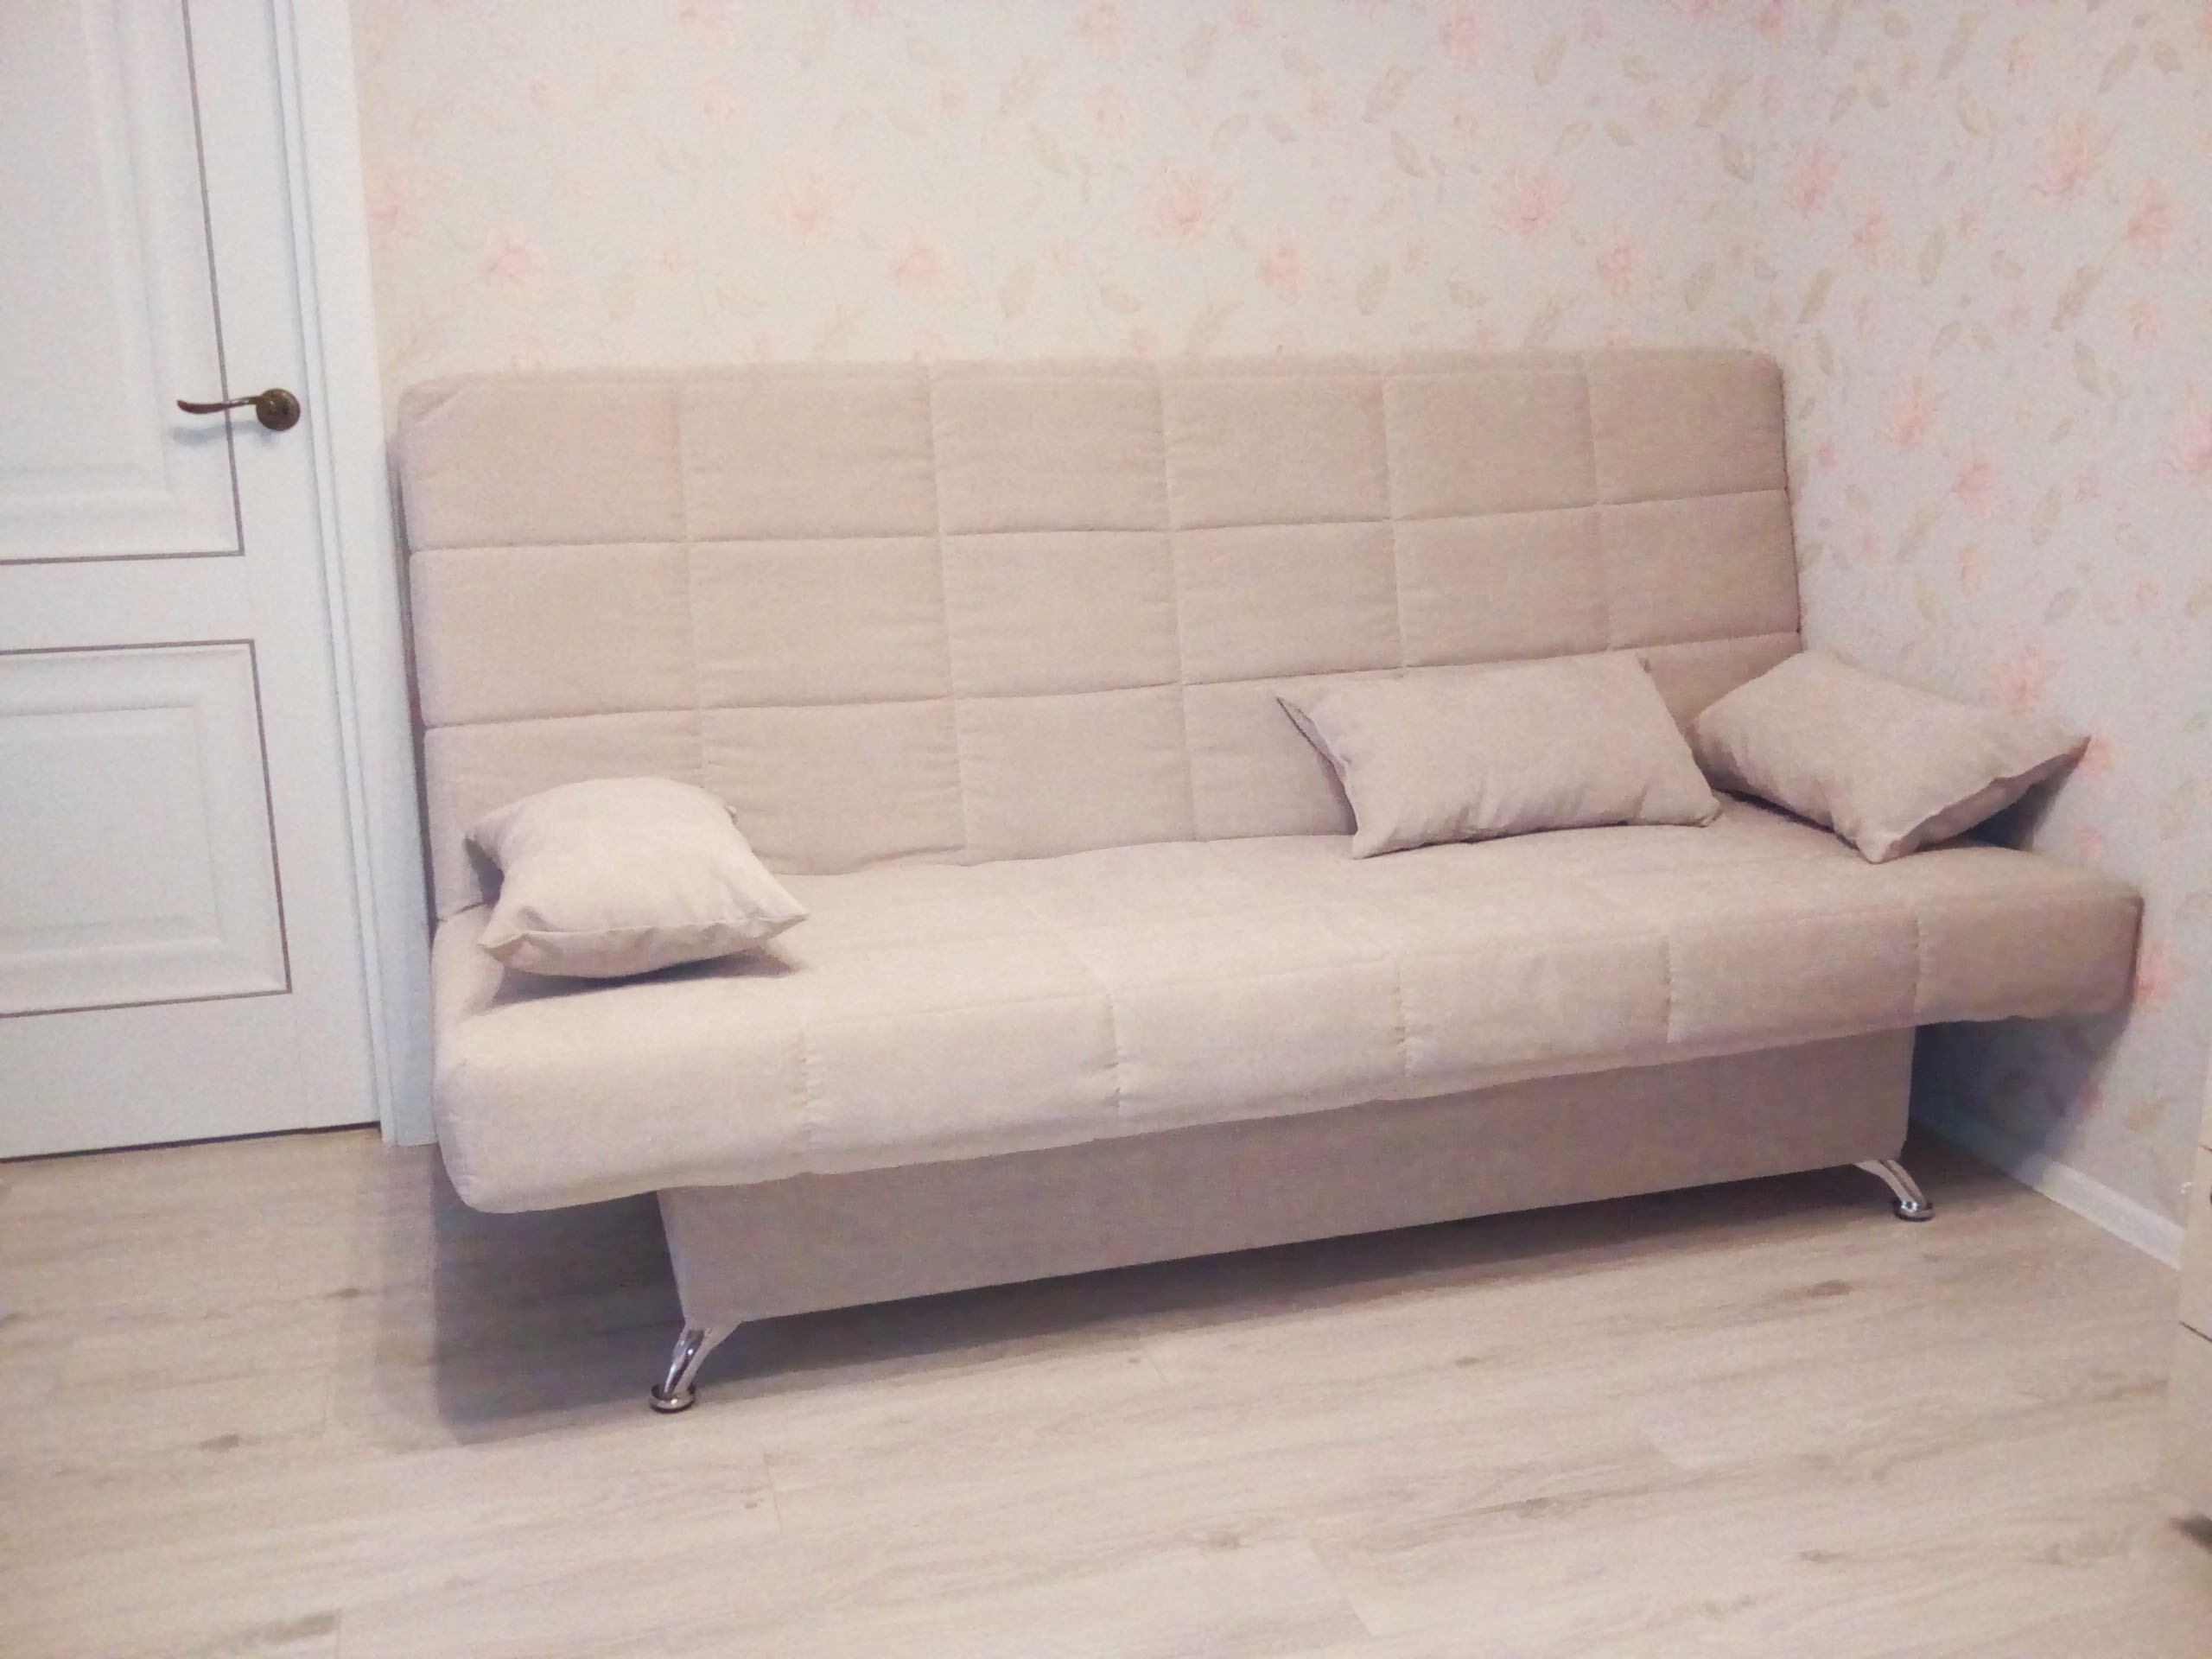 Диван Финка Велутто 40 – Купить диван за 15900.00 руб. от производителя